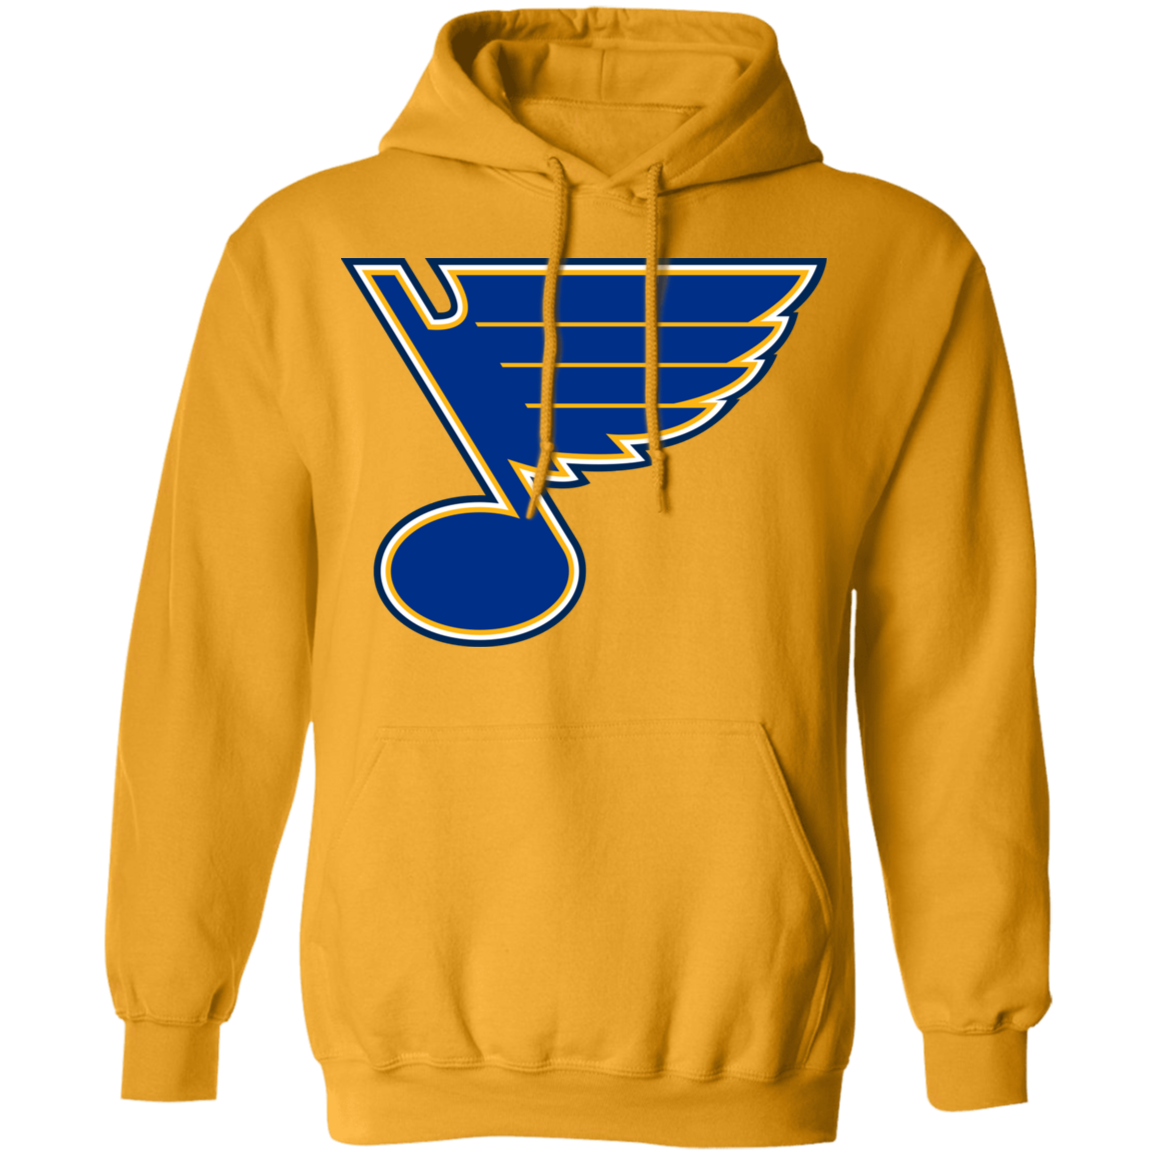 St. Louis Blues Sweatshirts, Blues Hoodies